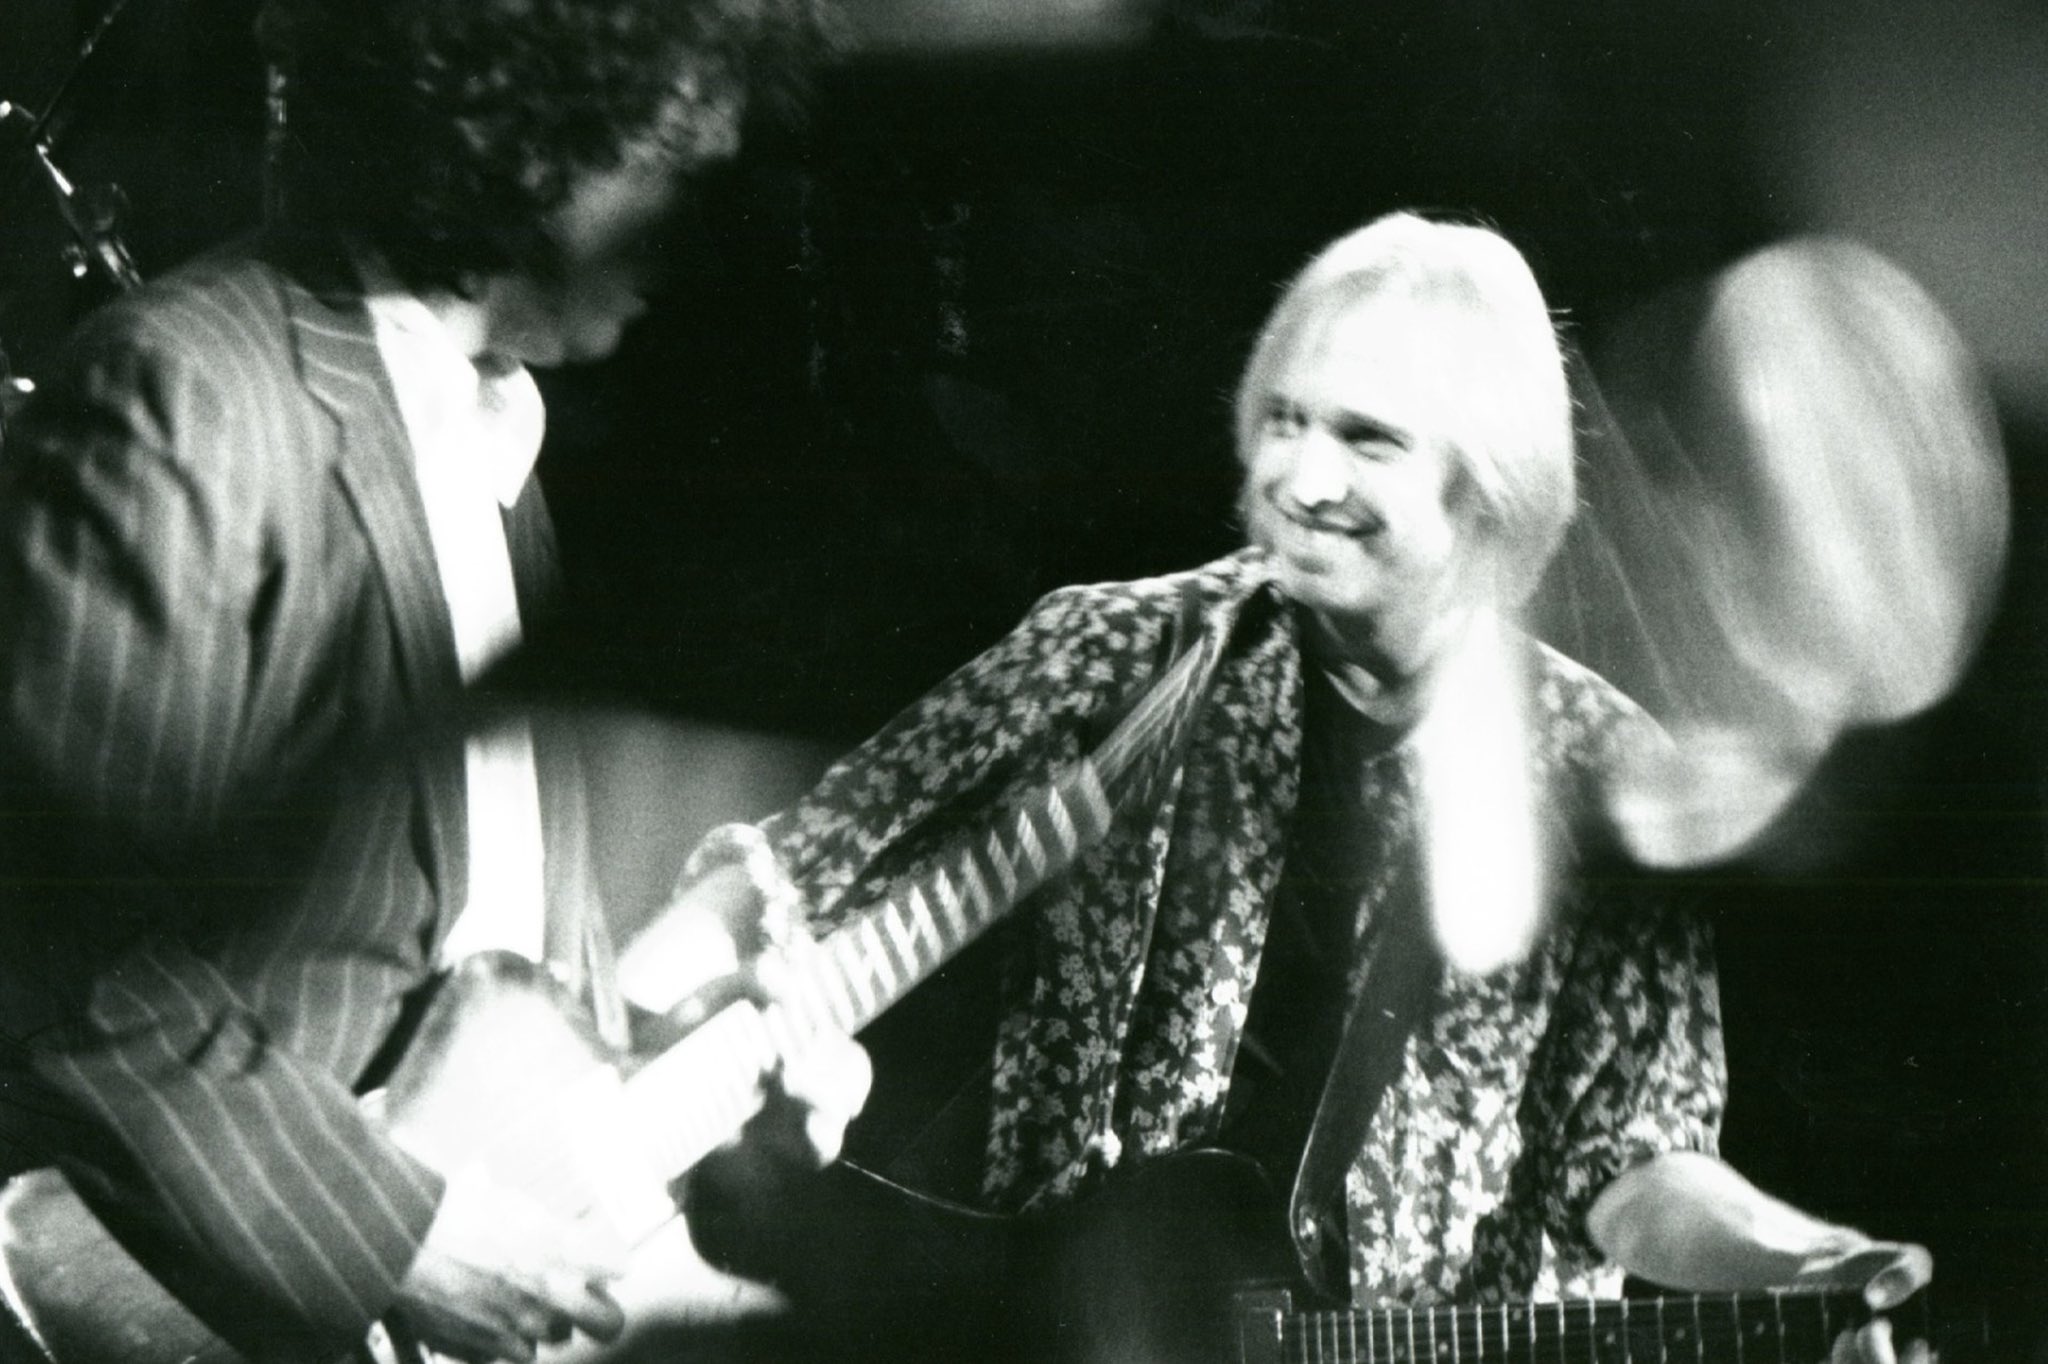 Plaat van de week: Tom Petty And The Heartbreakers – Listen To Her Heart (Live at the Fillmore, 1997)